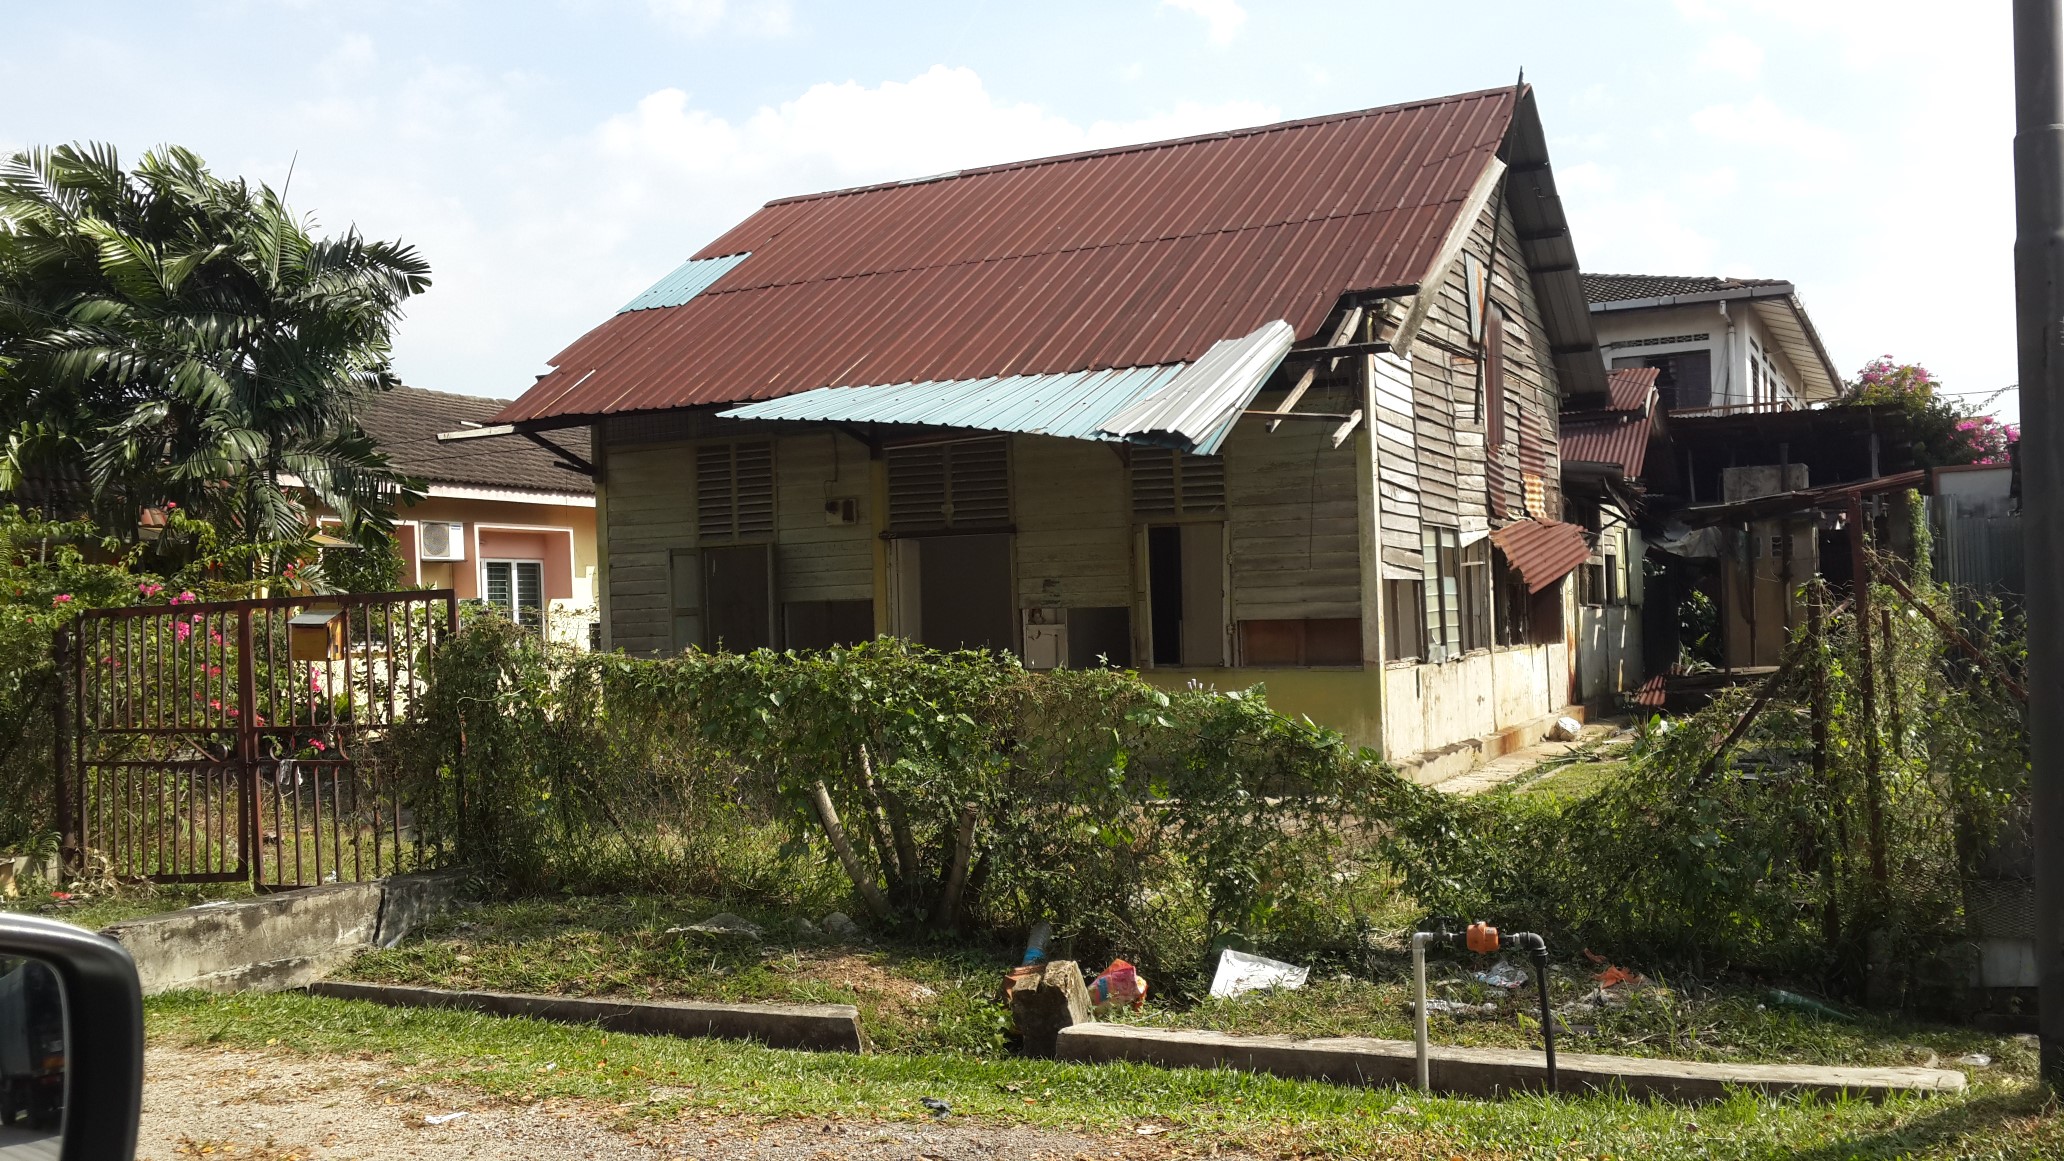 Bungalow Land for Sale in Section 4 Petaling Jaya (Rebuild Potential)